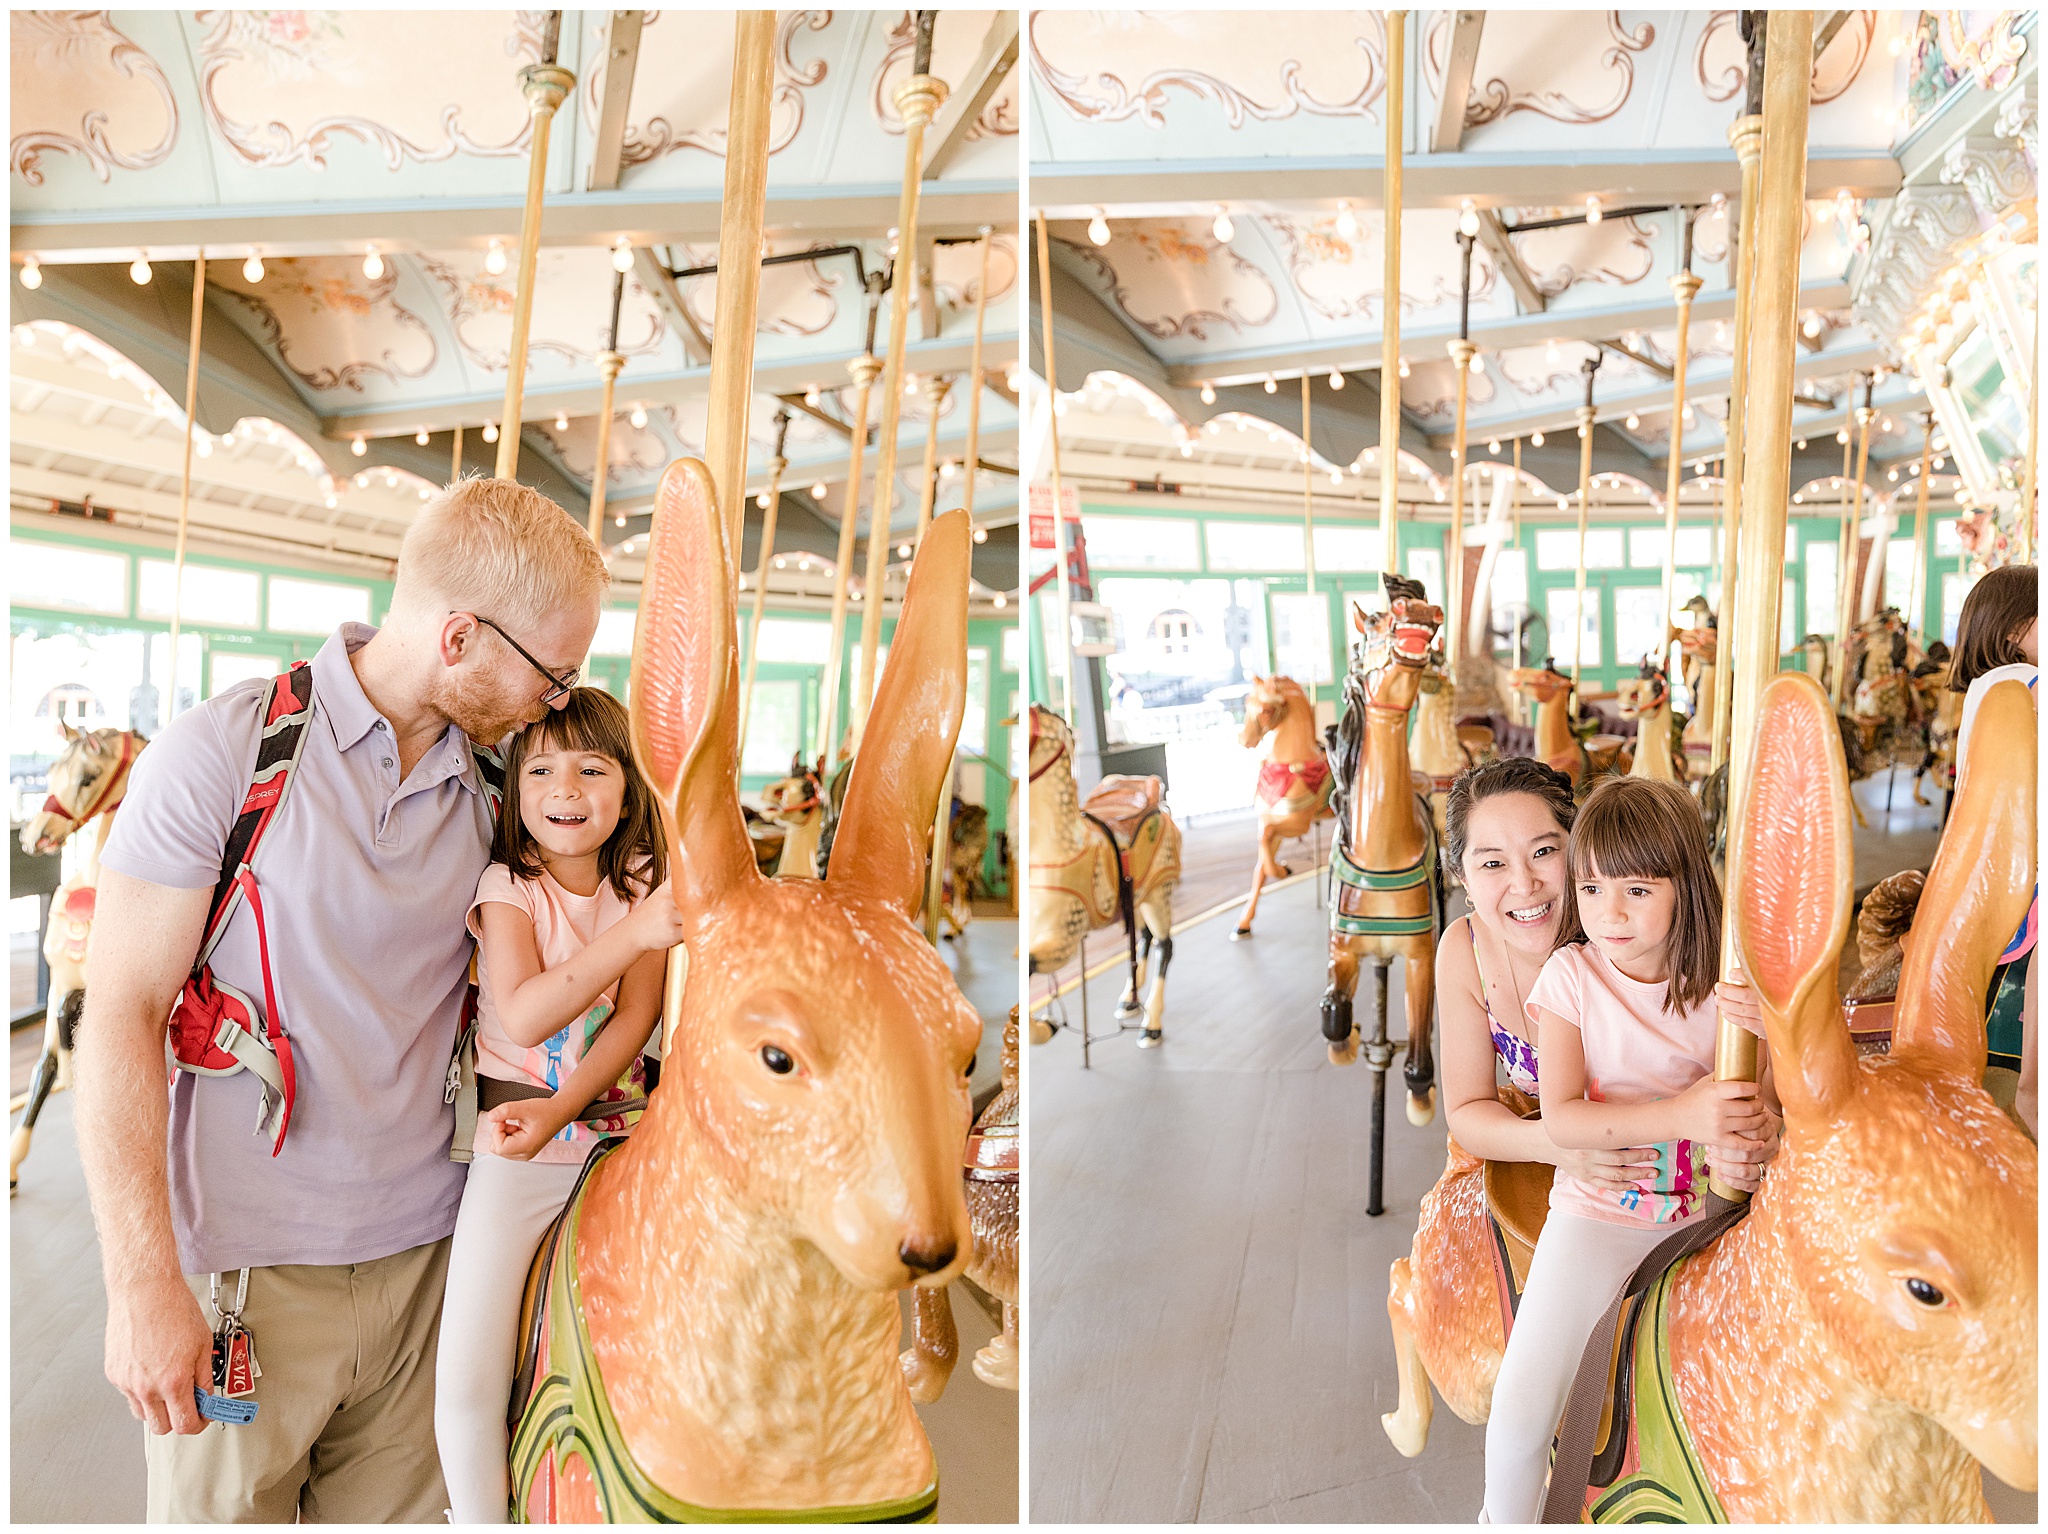 Family Photos at Glen Echo Park Carousel with Photographers John and Bethany Kofmehl